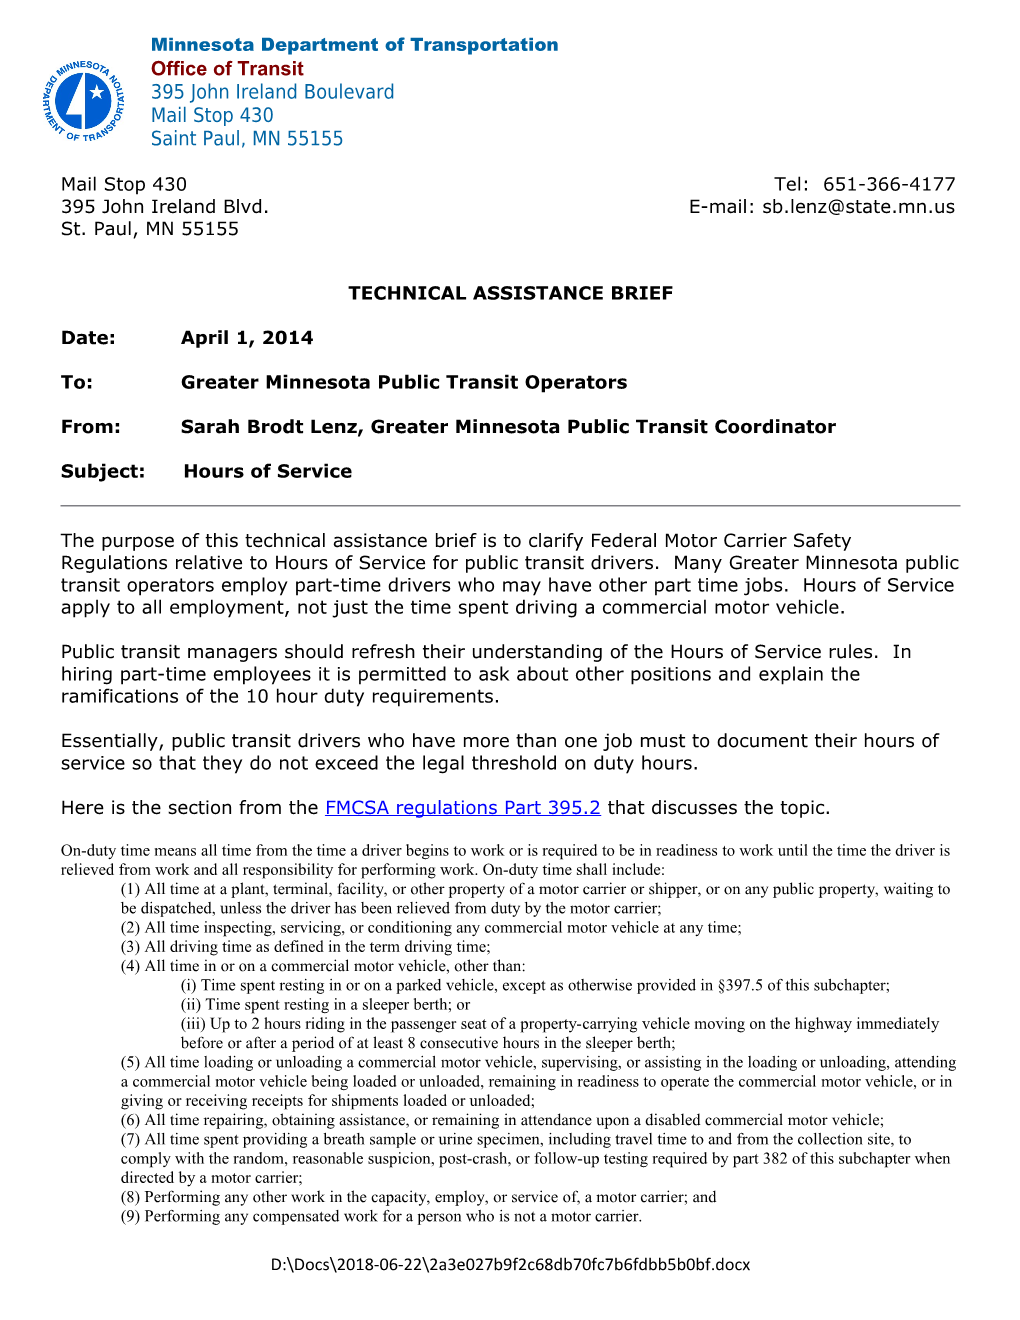 To: Greater Minnesota Public Transit Operators